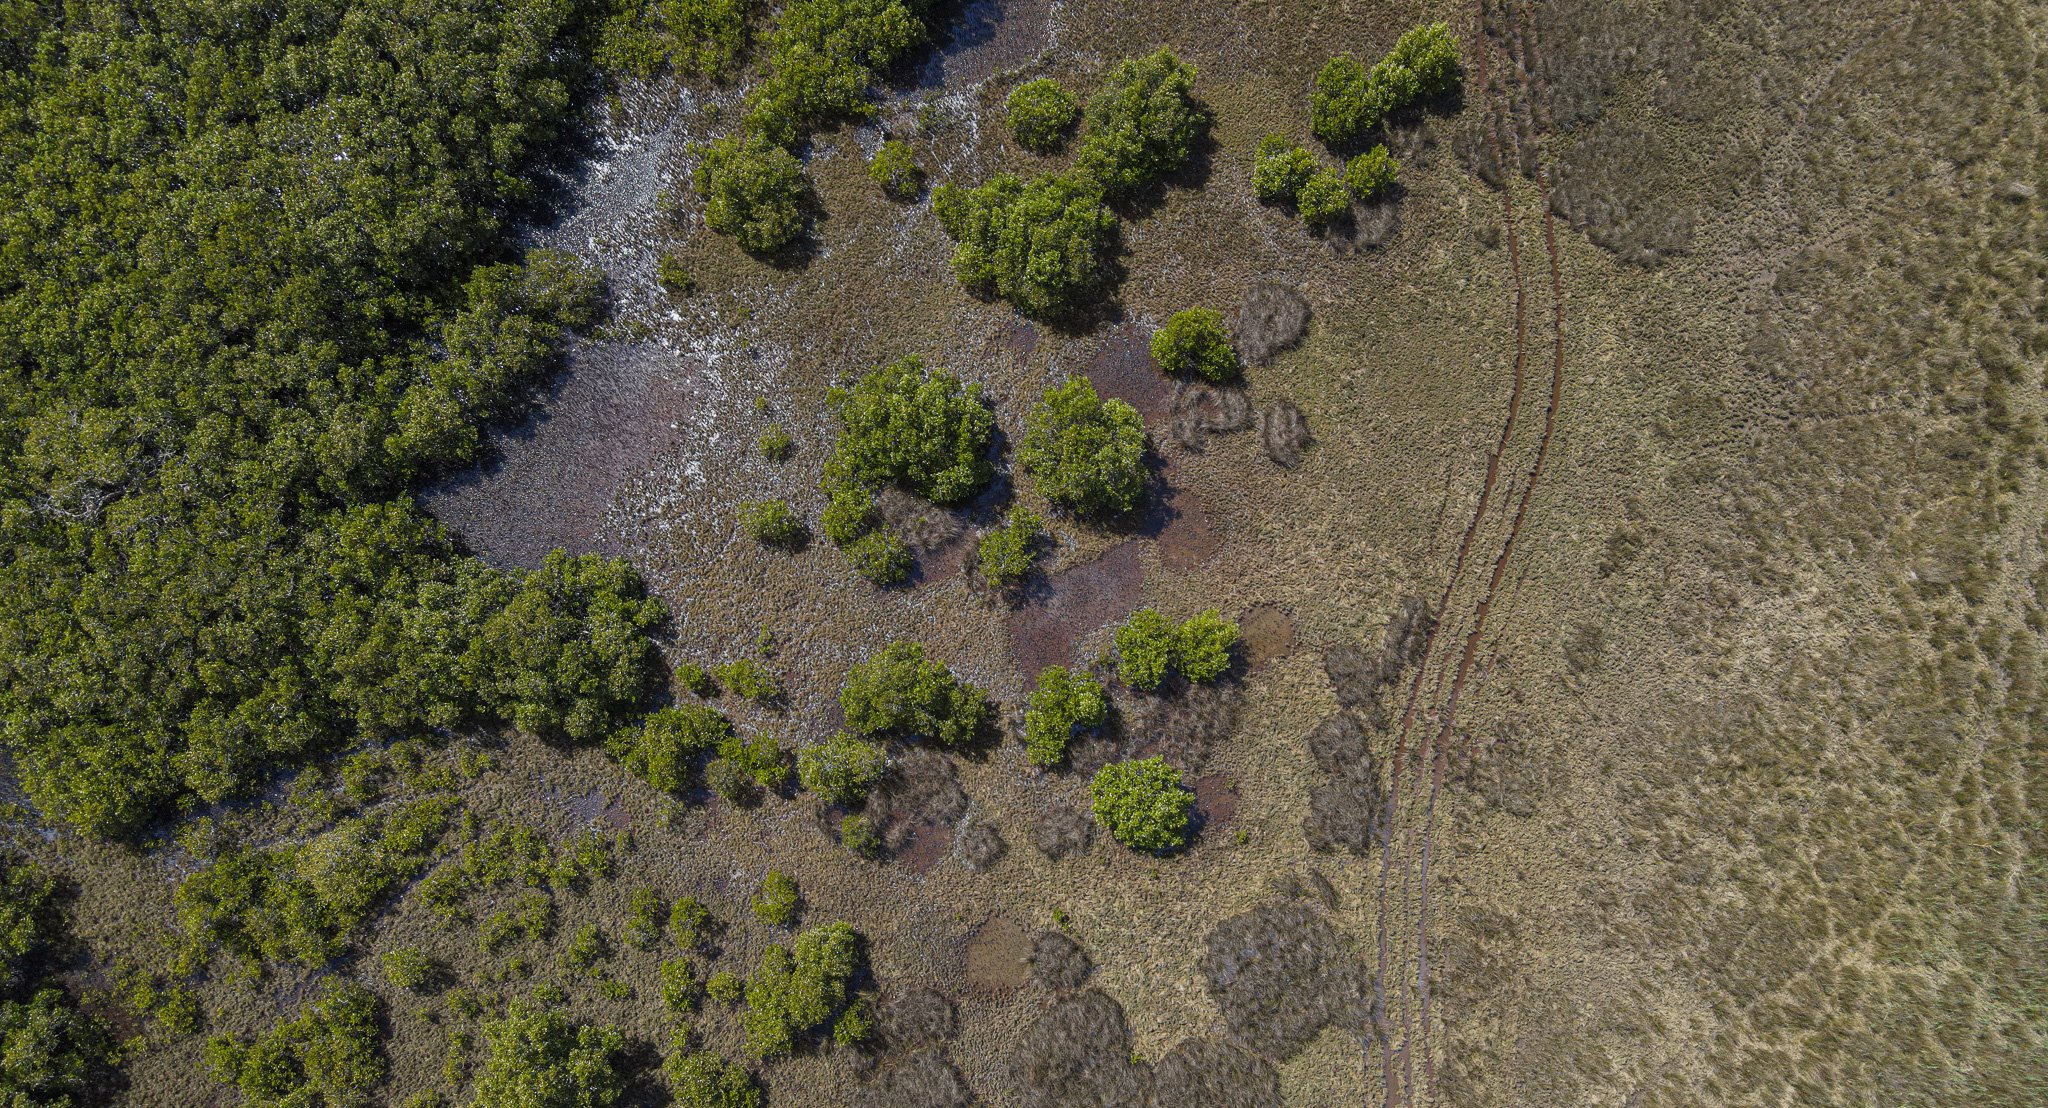  Car tracks through an Estuarine Wetland in South West Rocks, Australia. 